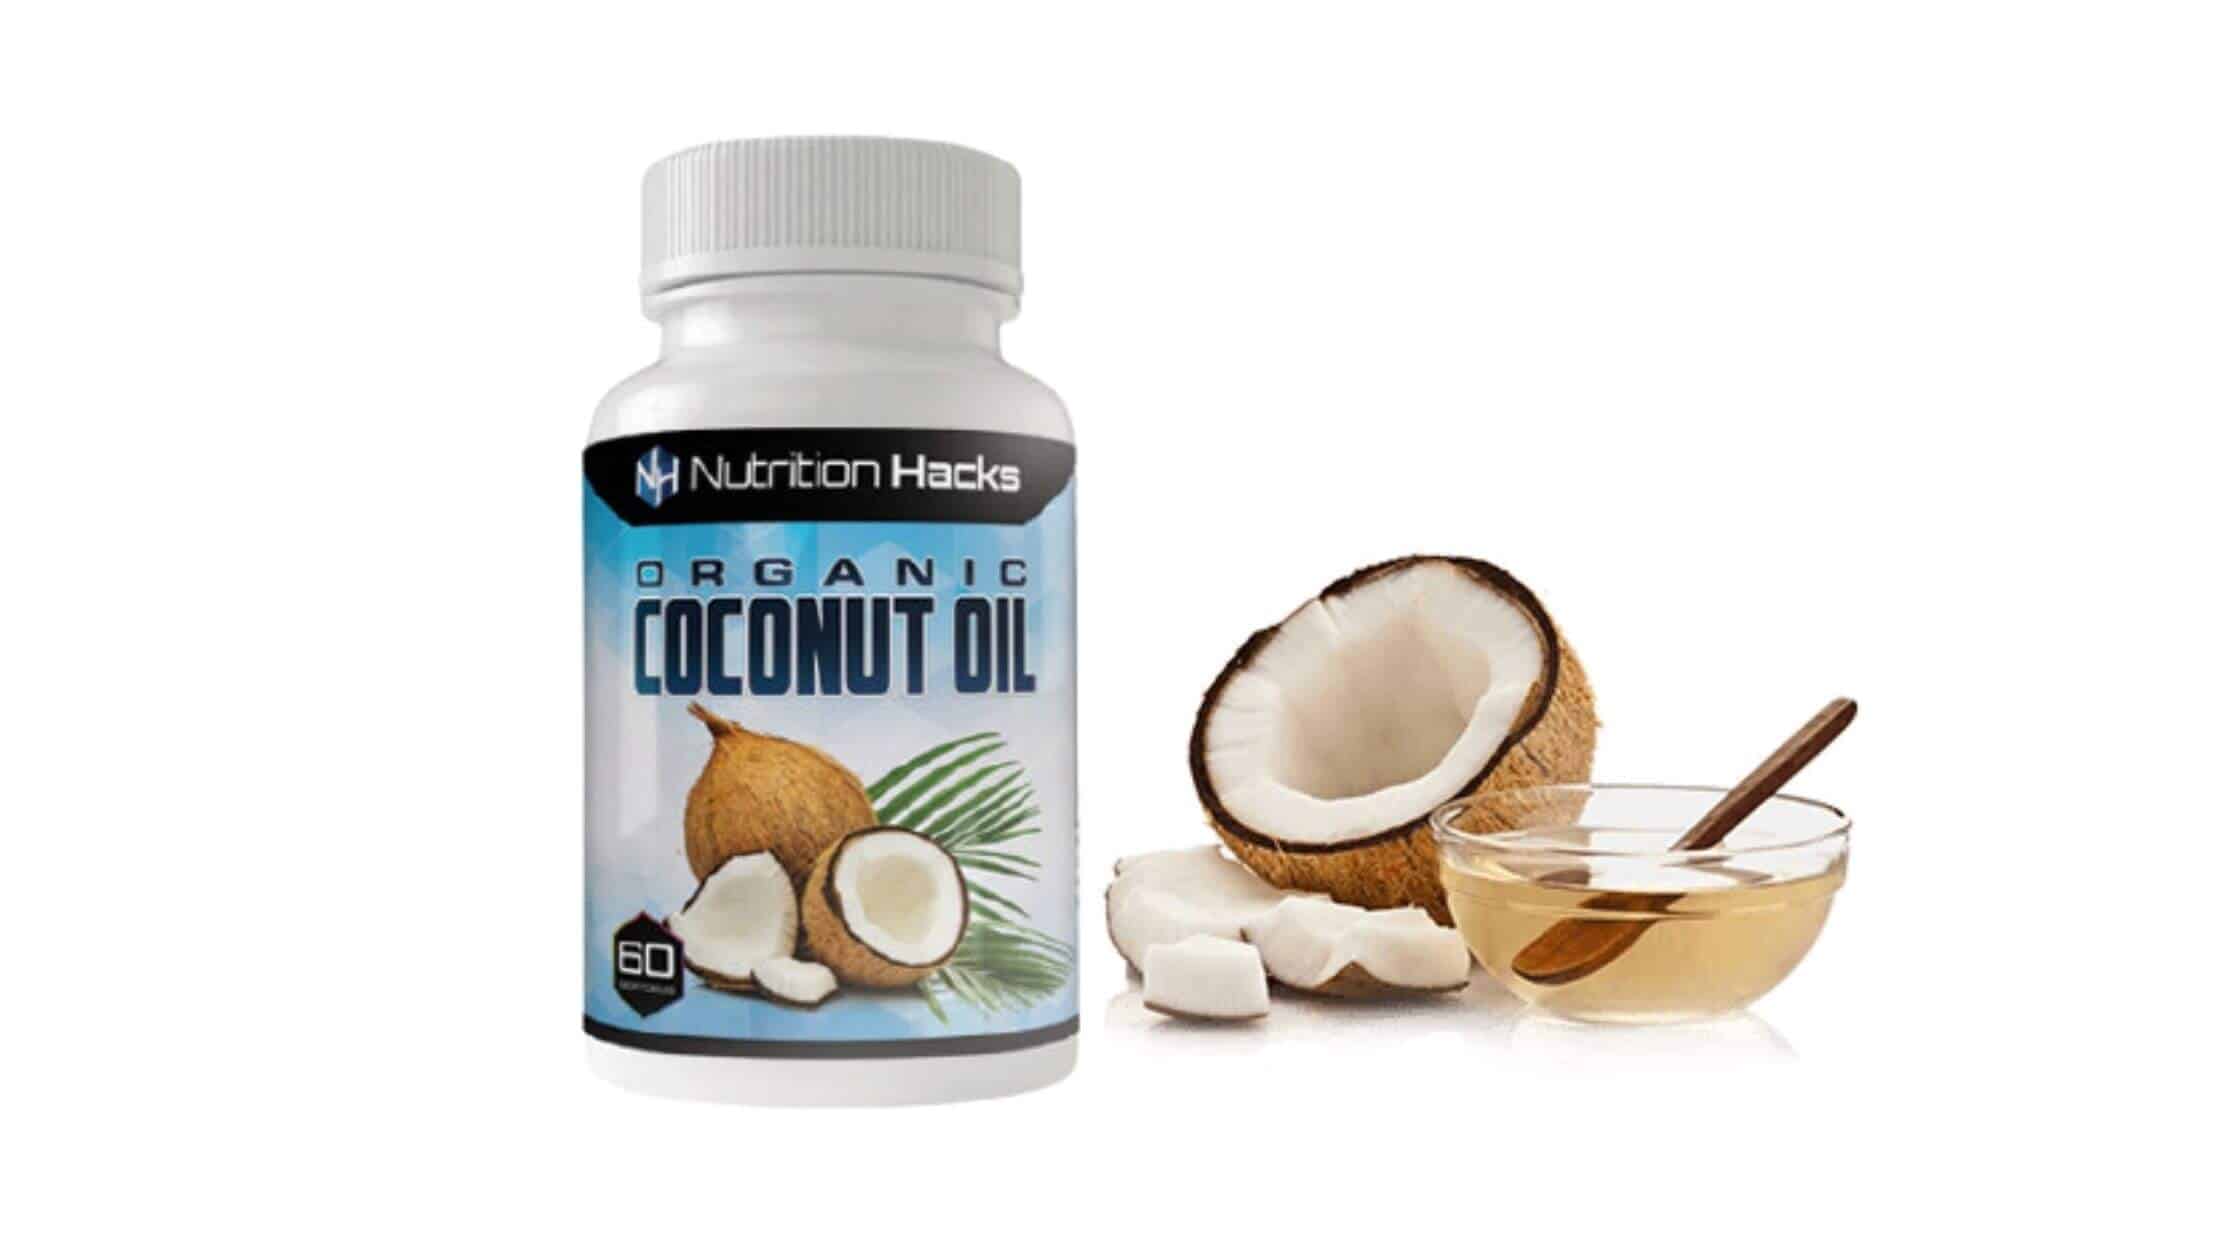 Nutrition Hacks Organic Coconut Oil Ingredient 